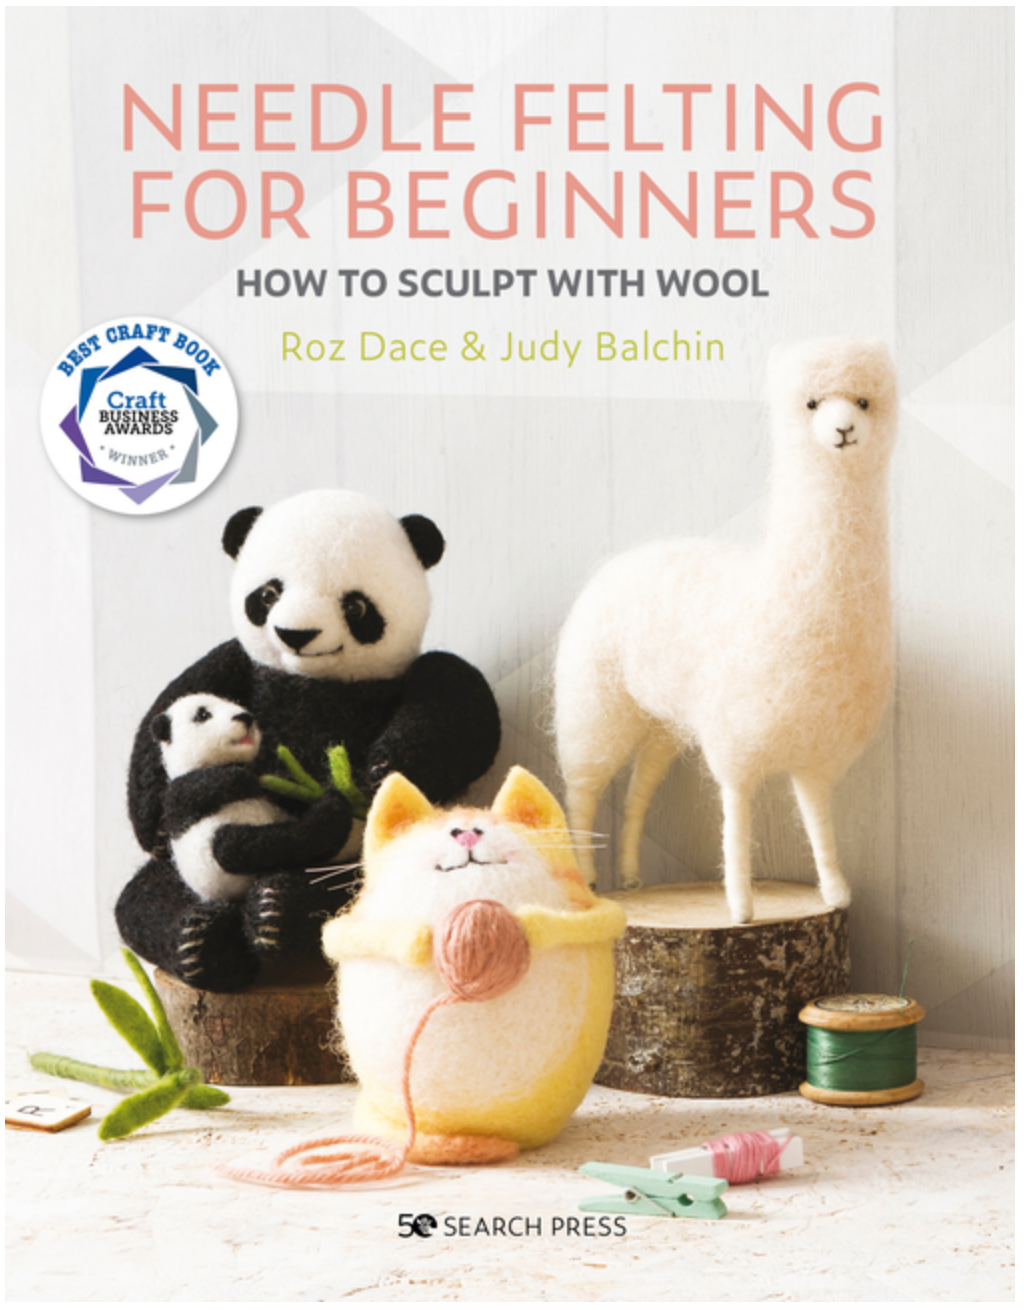 Needle Felting for Beginners by Rob Dace & Judy Balchin